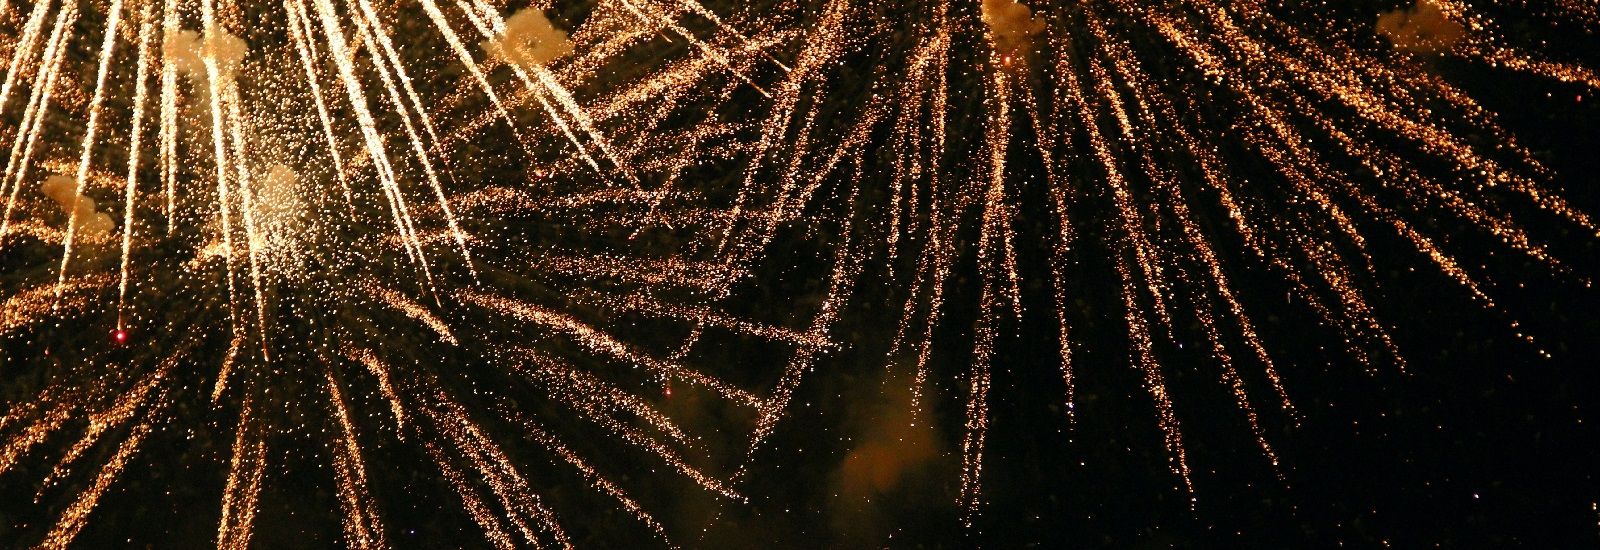 McGrath New Year's Eve Fireworks Display banner image